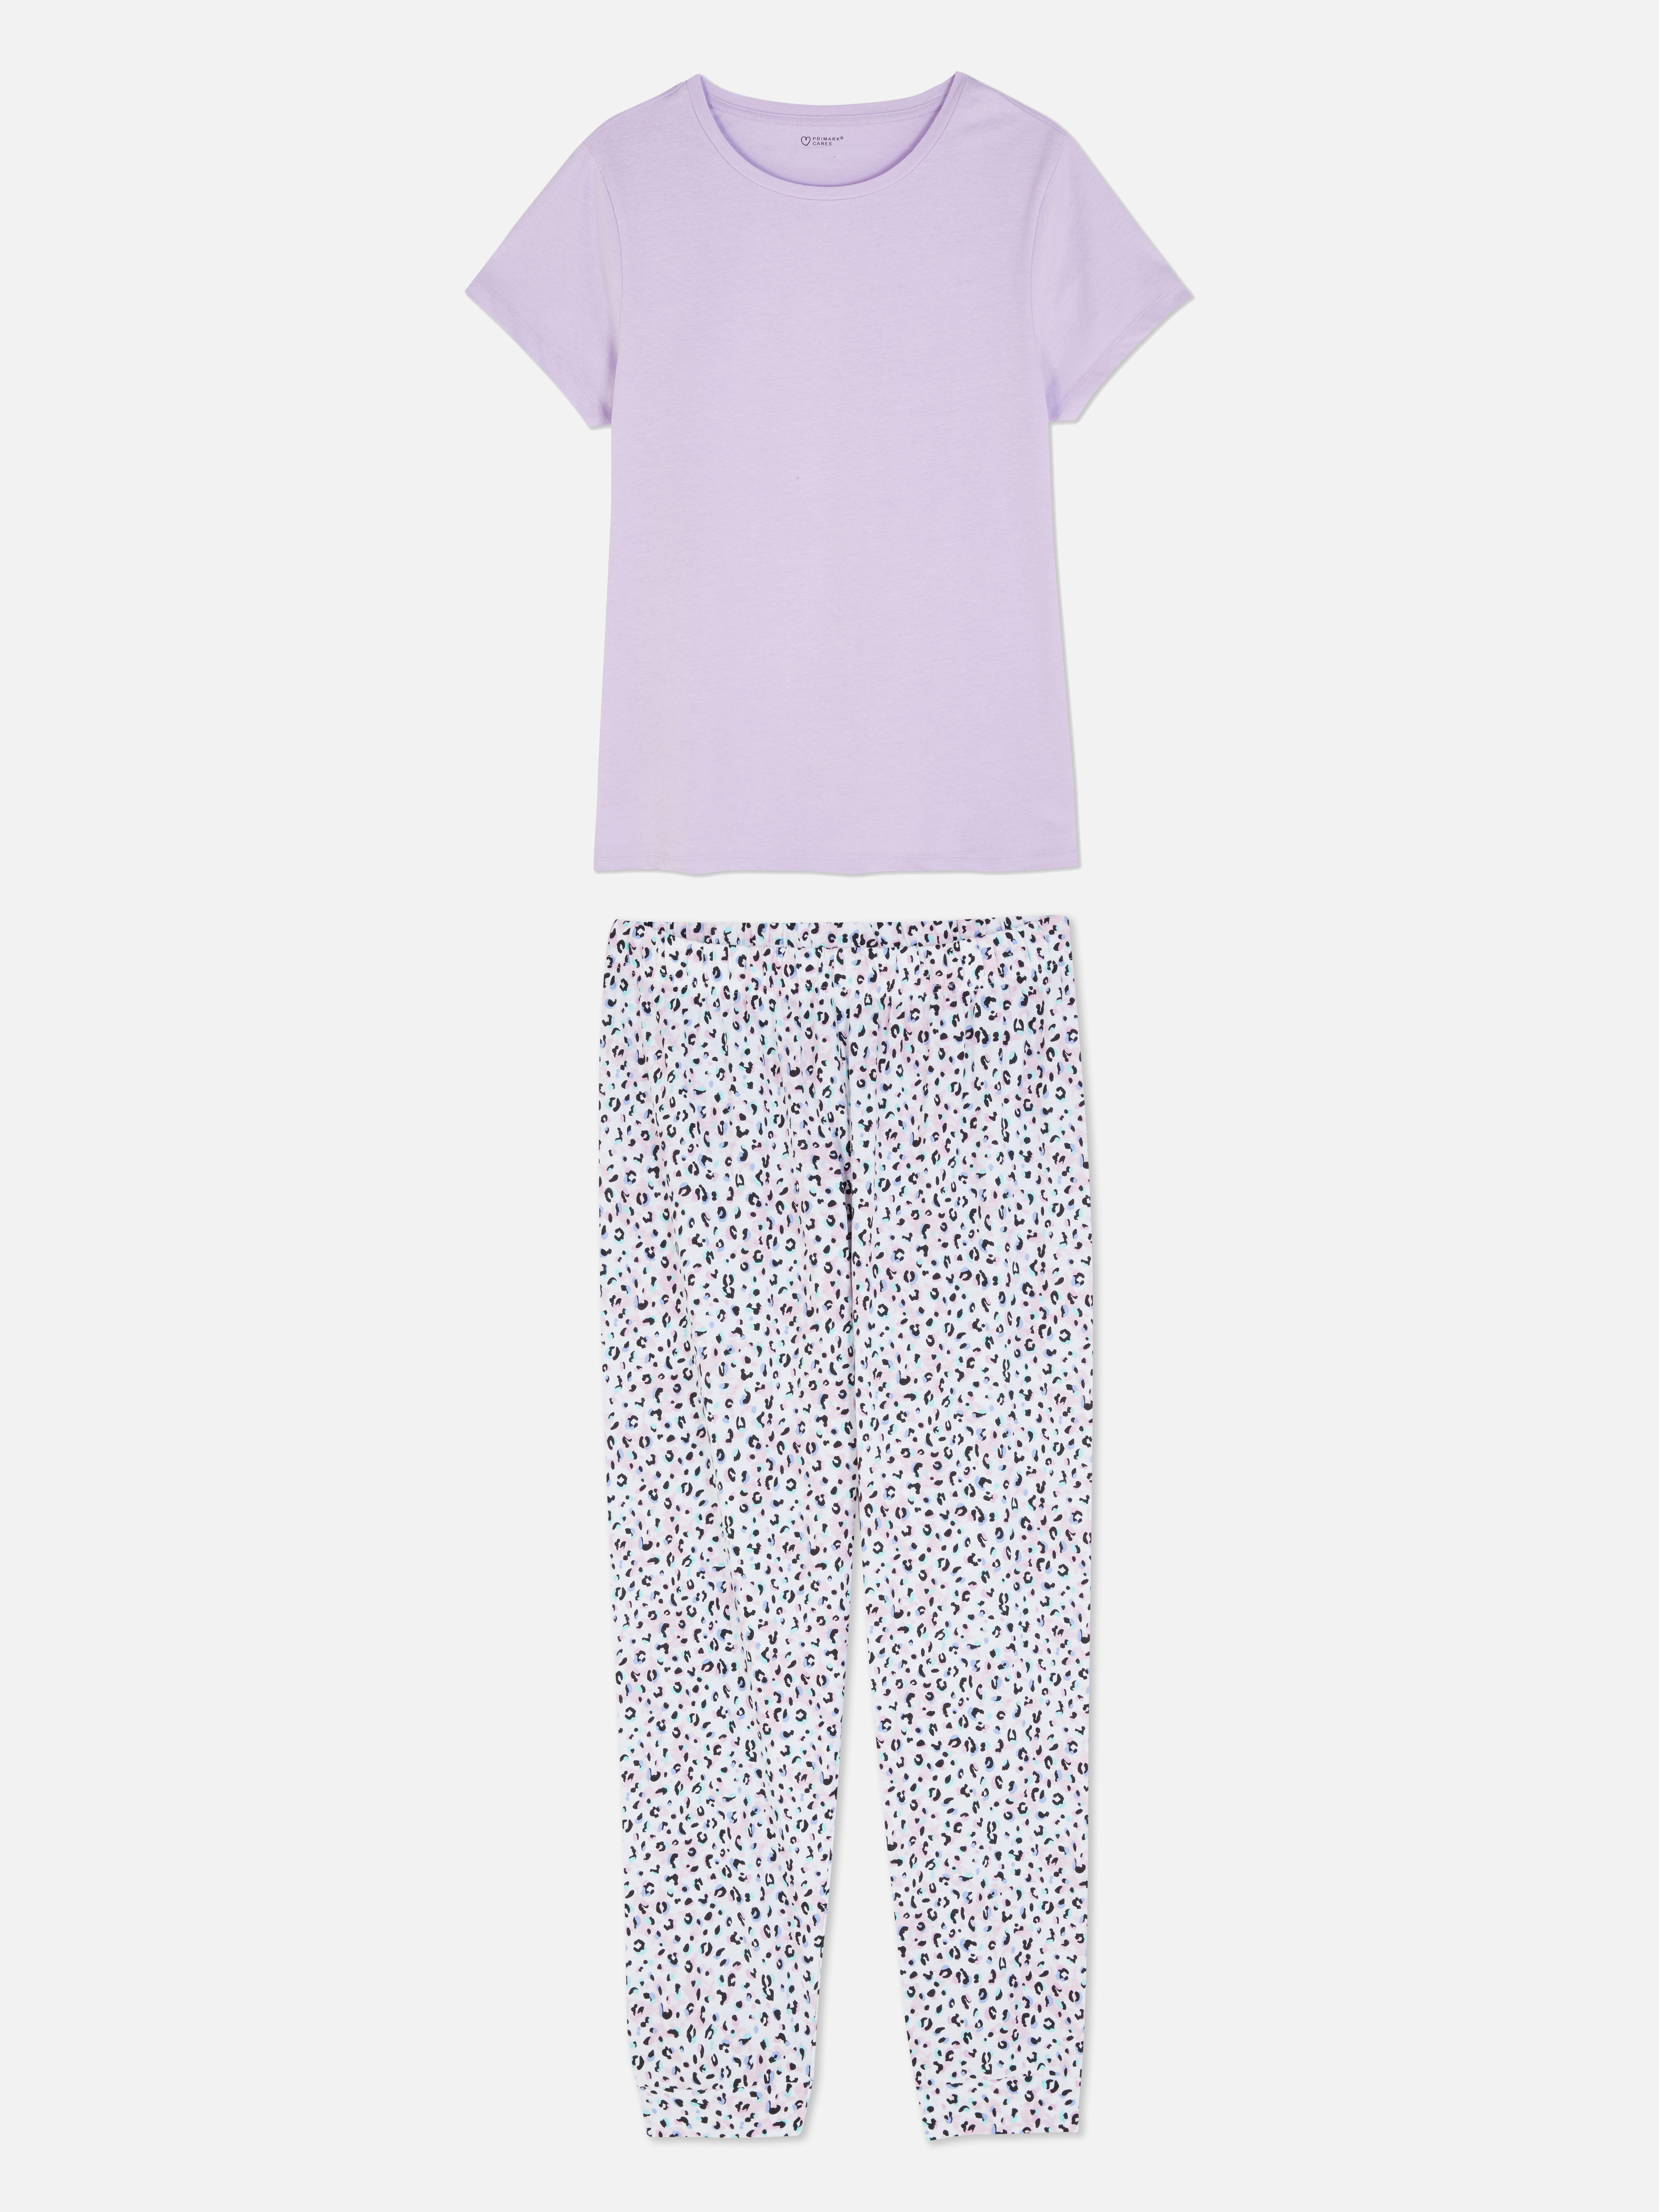 Pijamas para mujer |Conjuntos de pijamas de manga corta y Primark